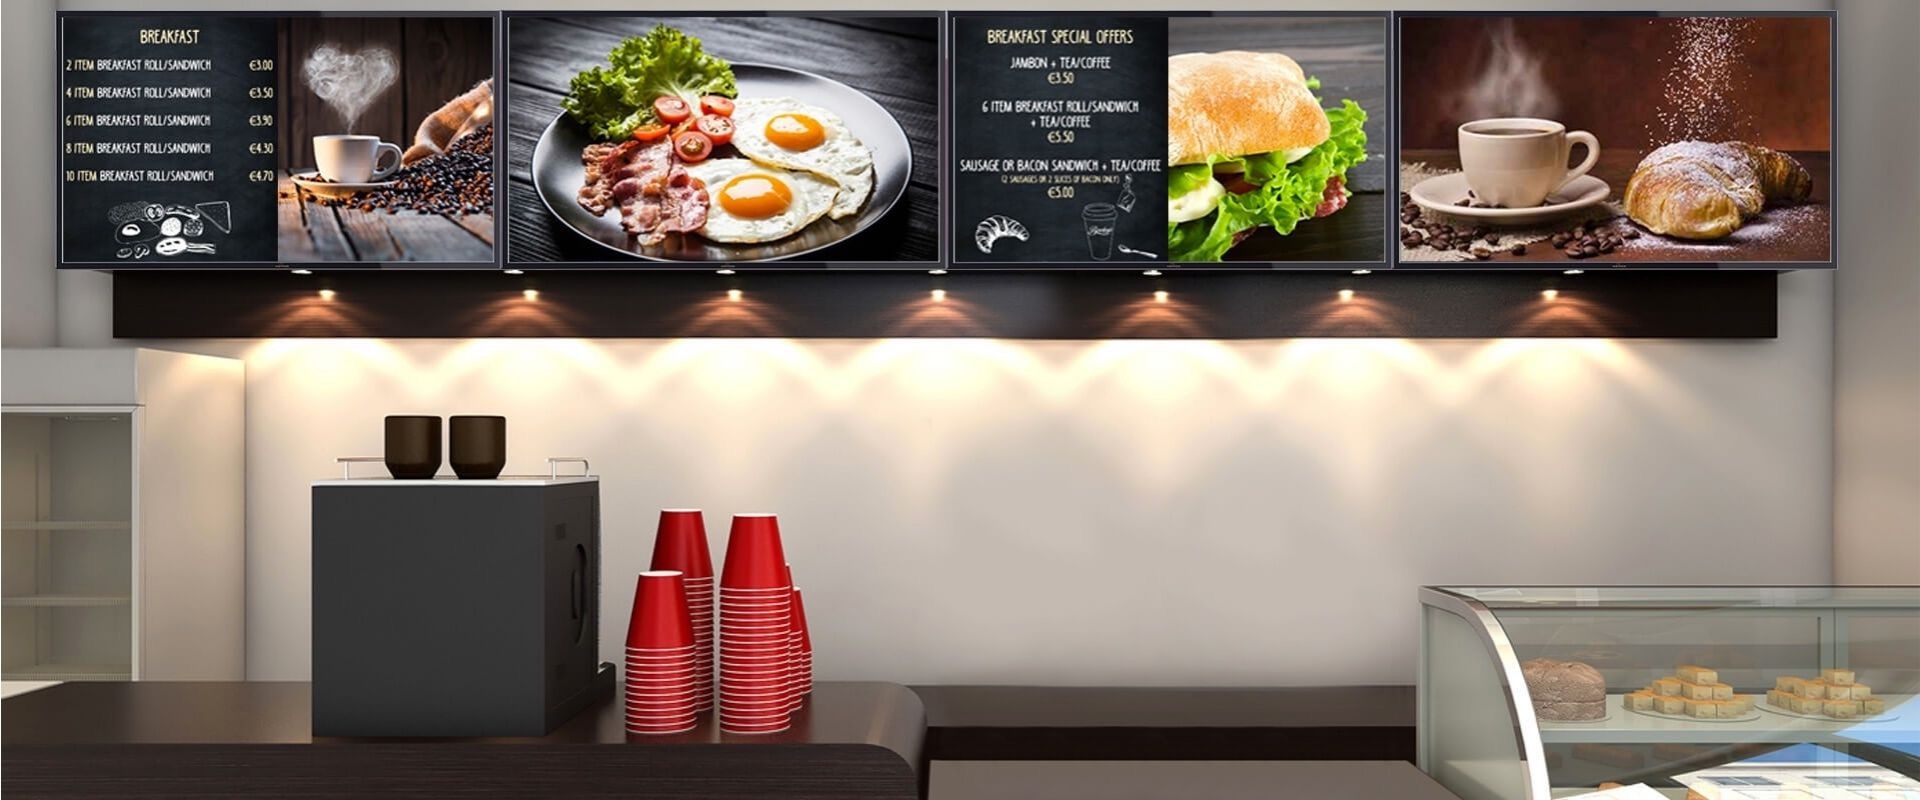 Restaurant Digital Signage